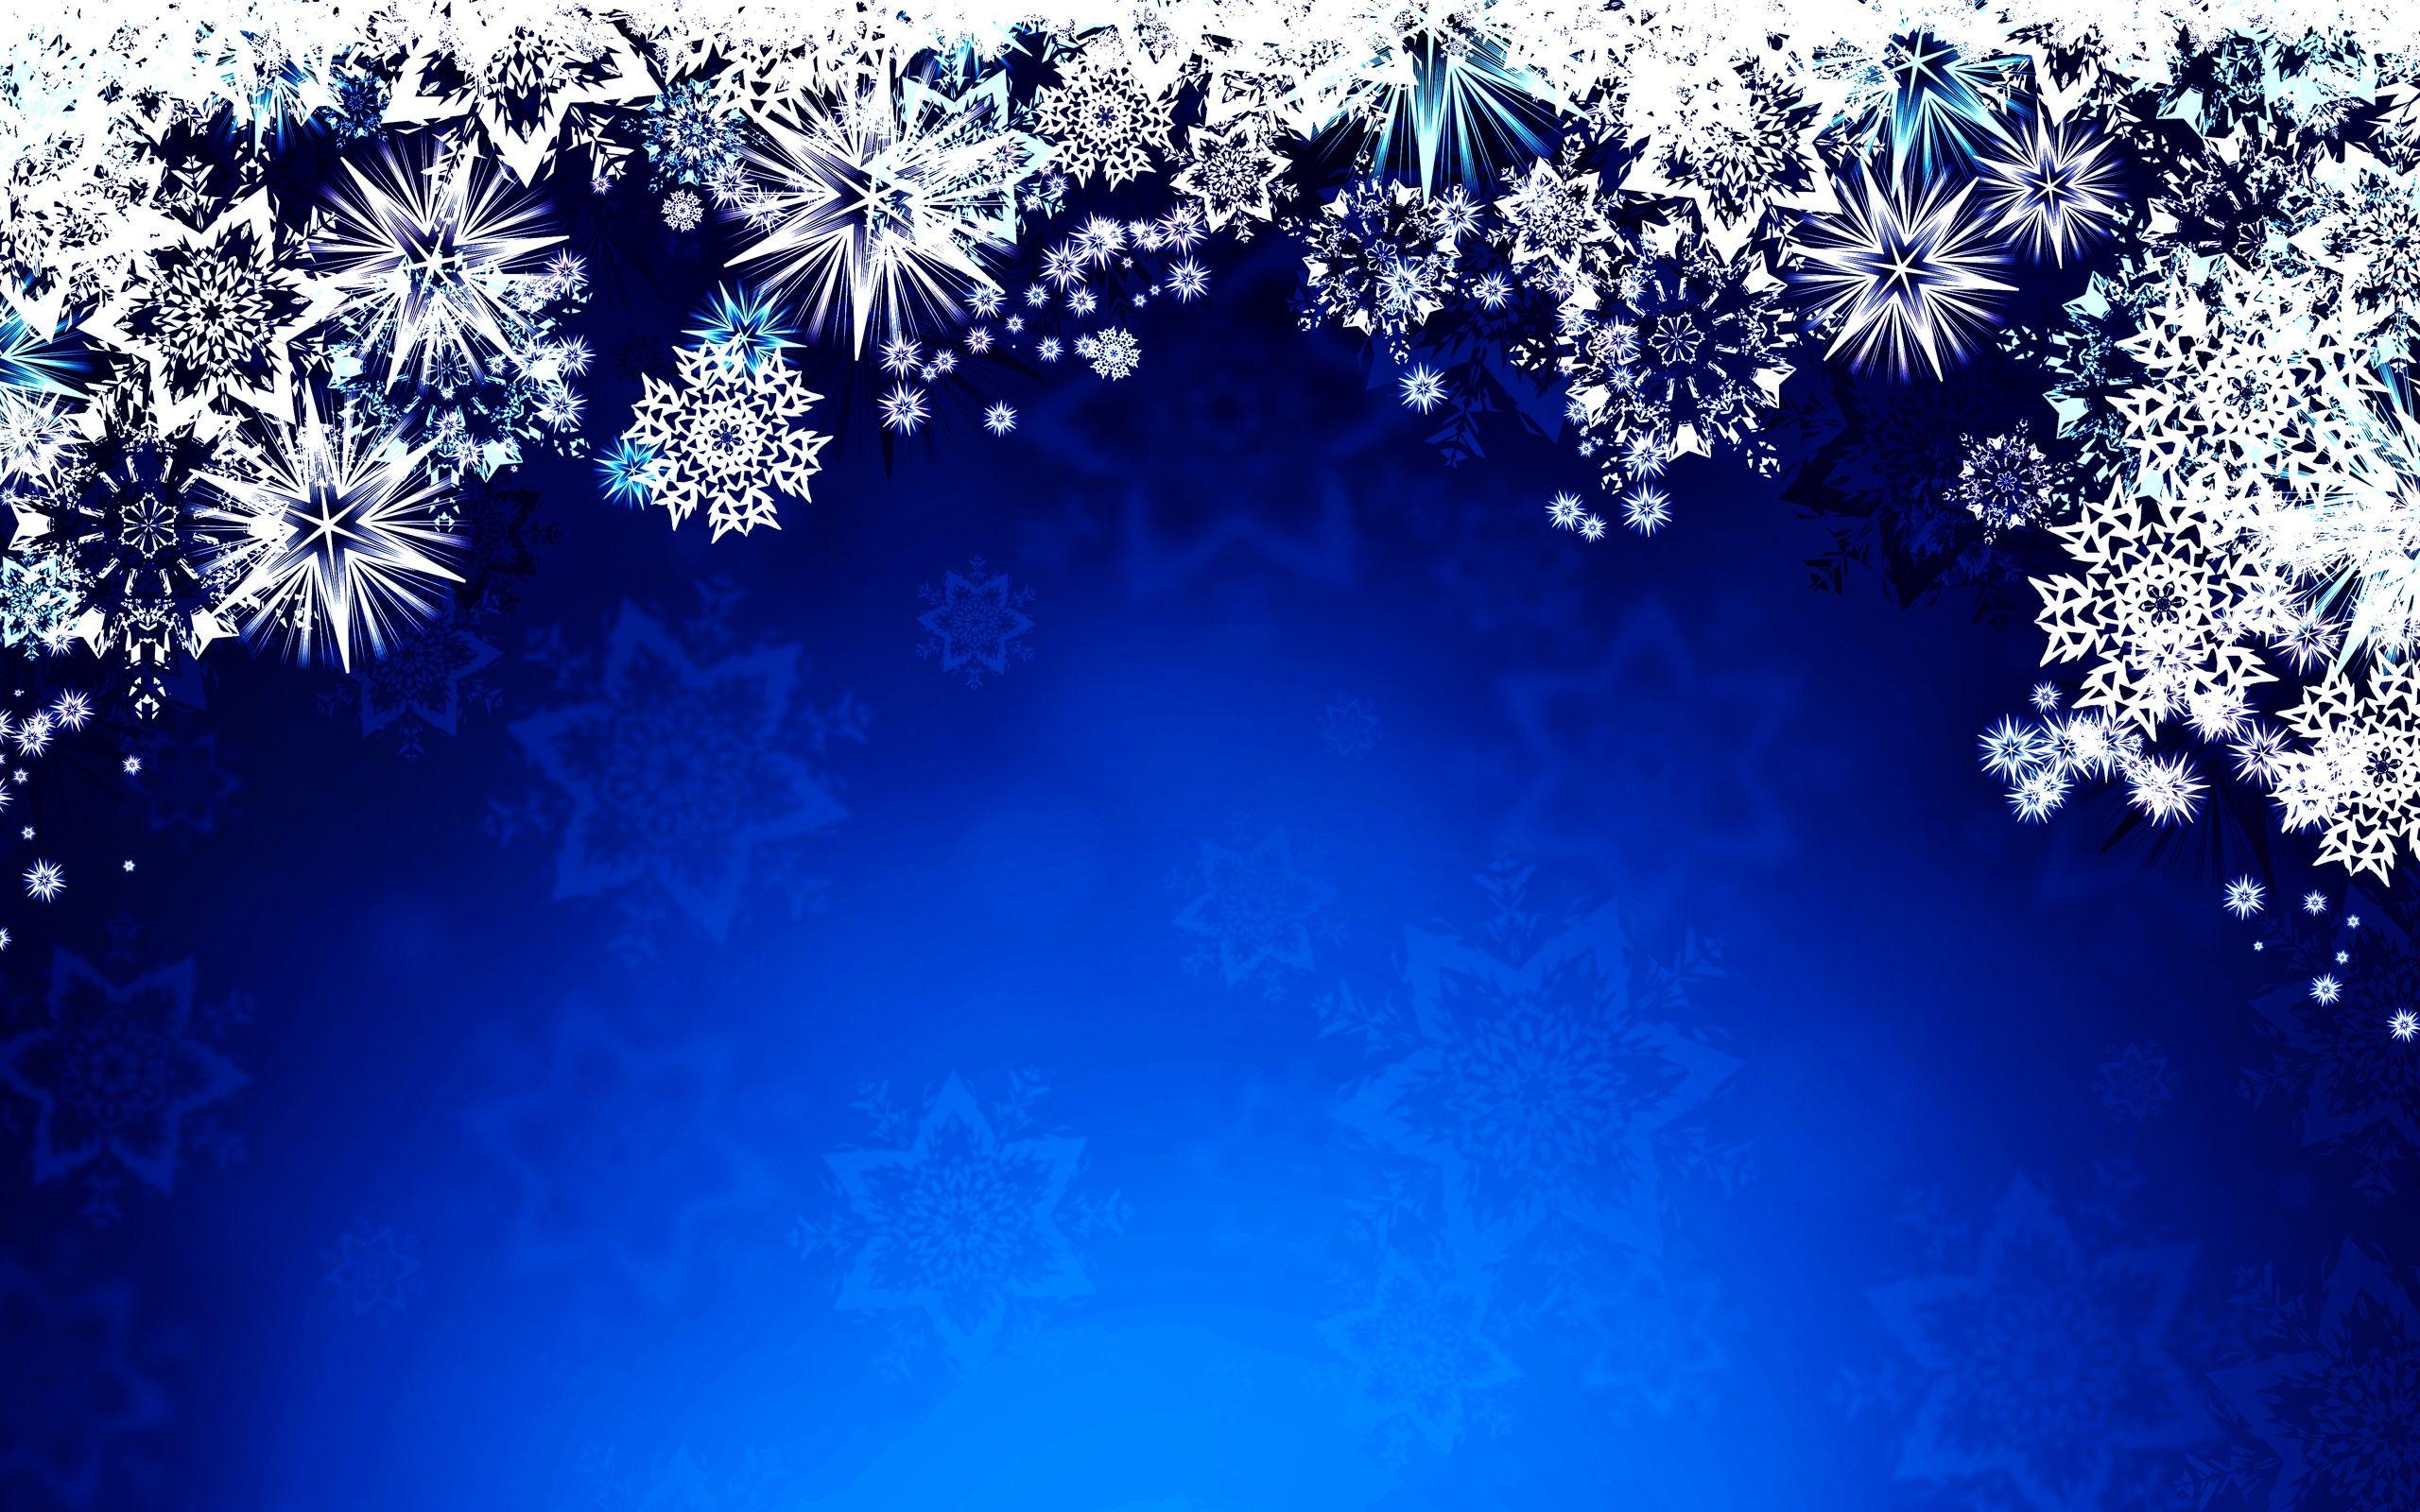 Snowflakes Backgrounds For Desktop